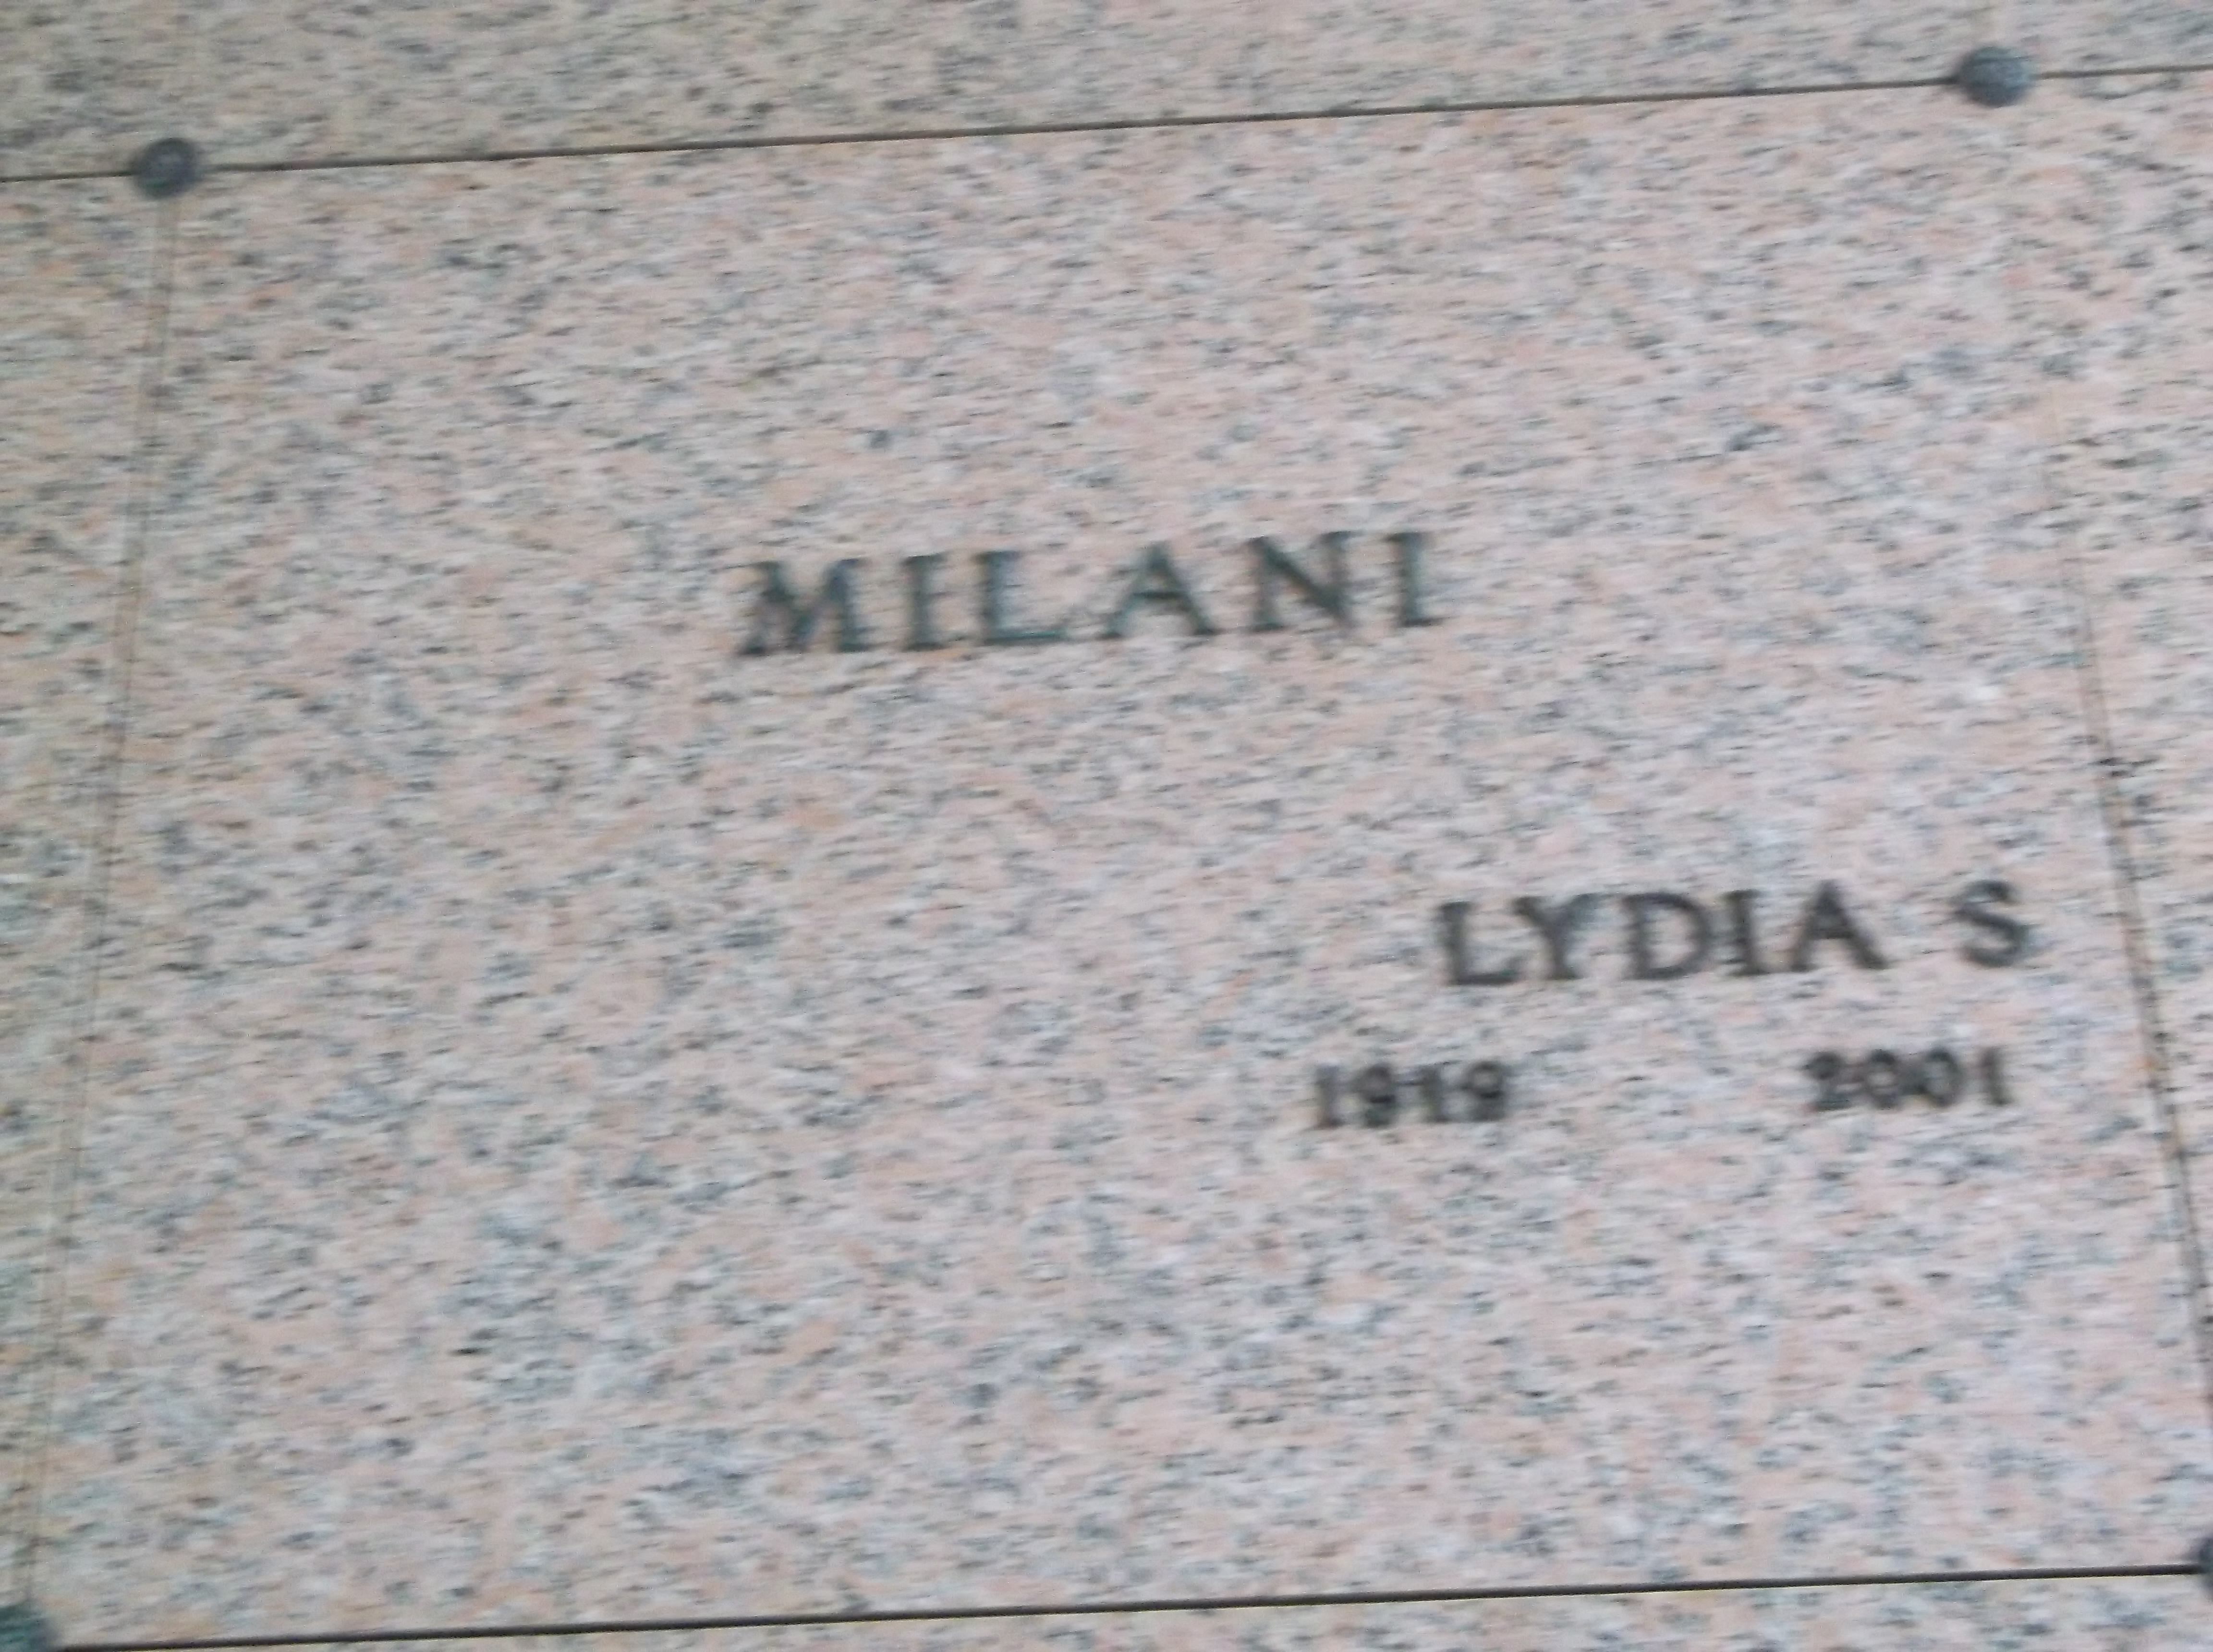 Lydia S Milani